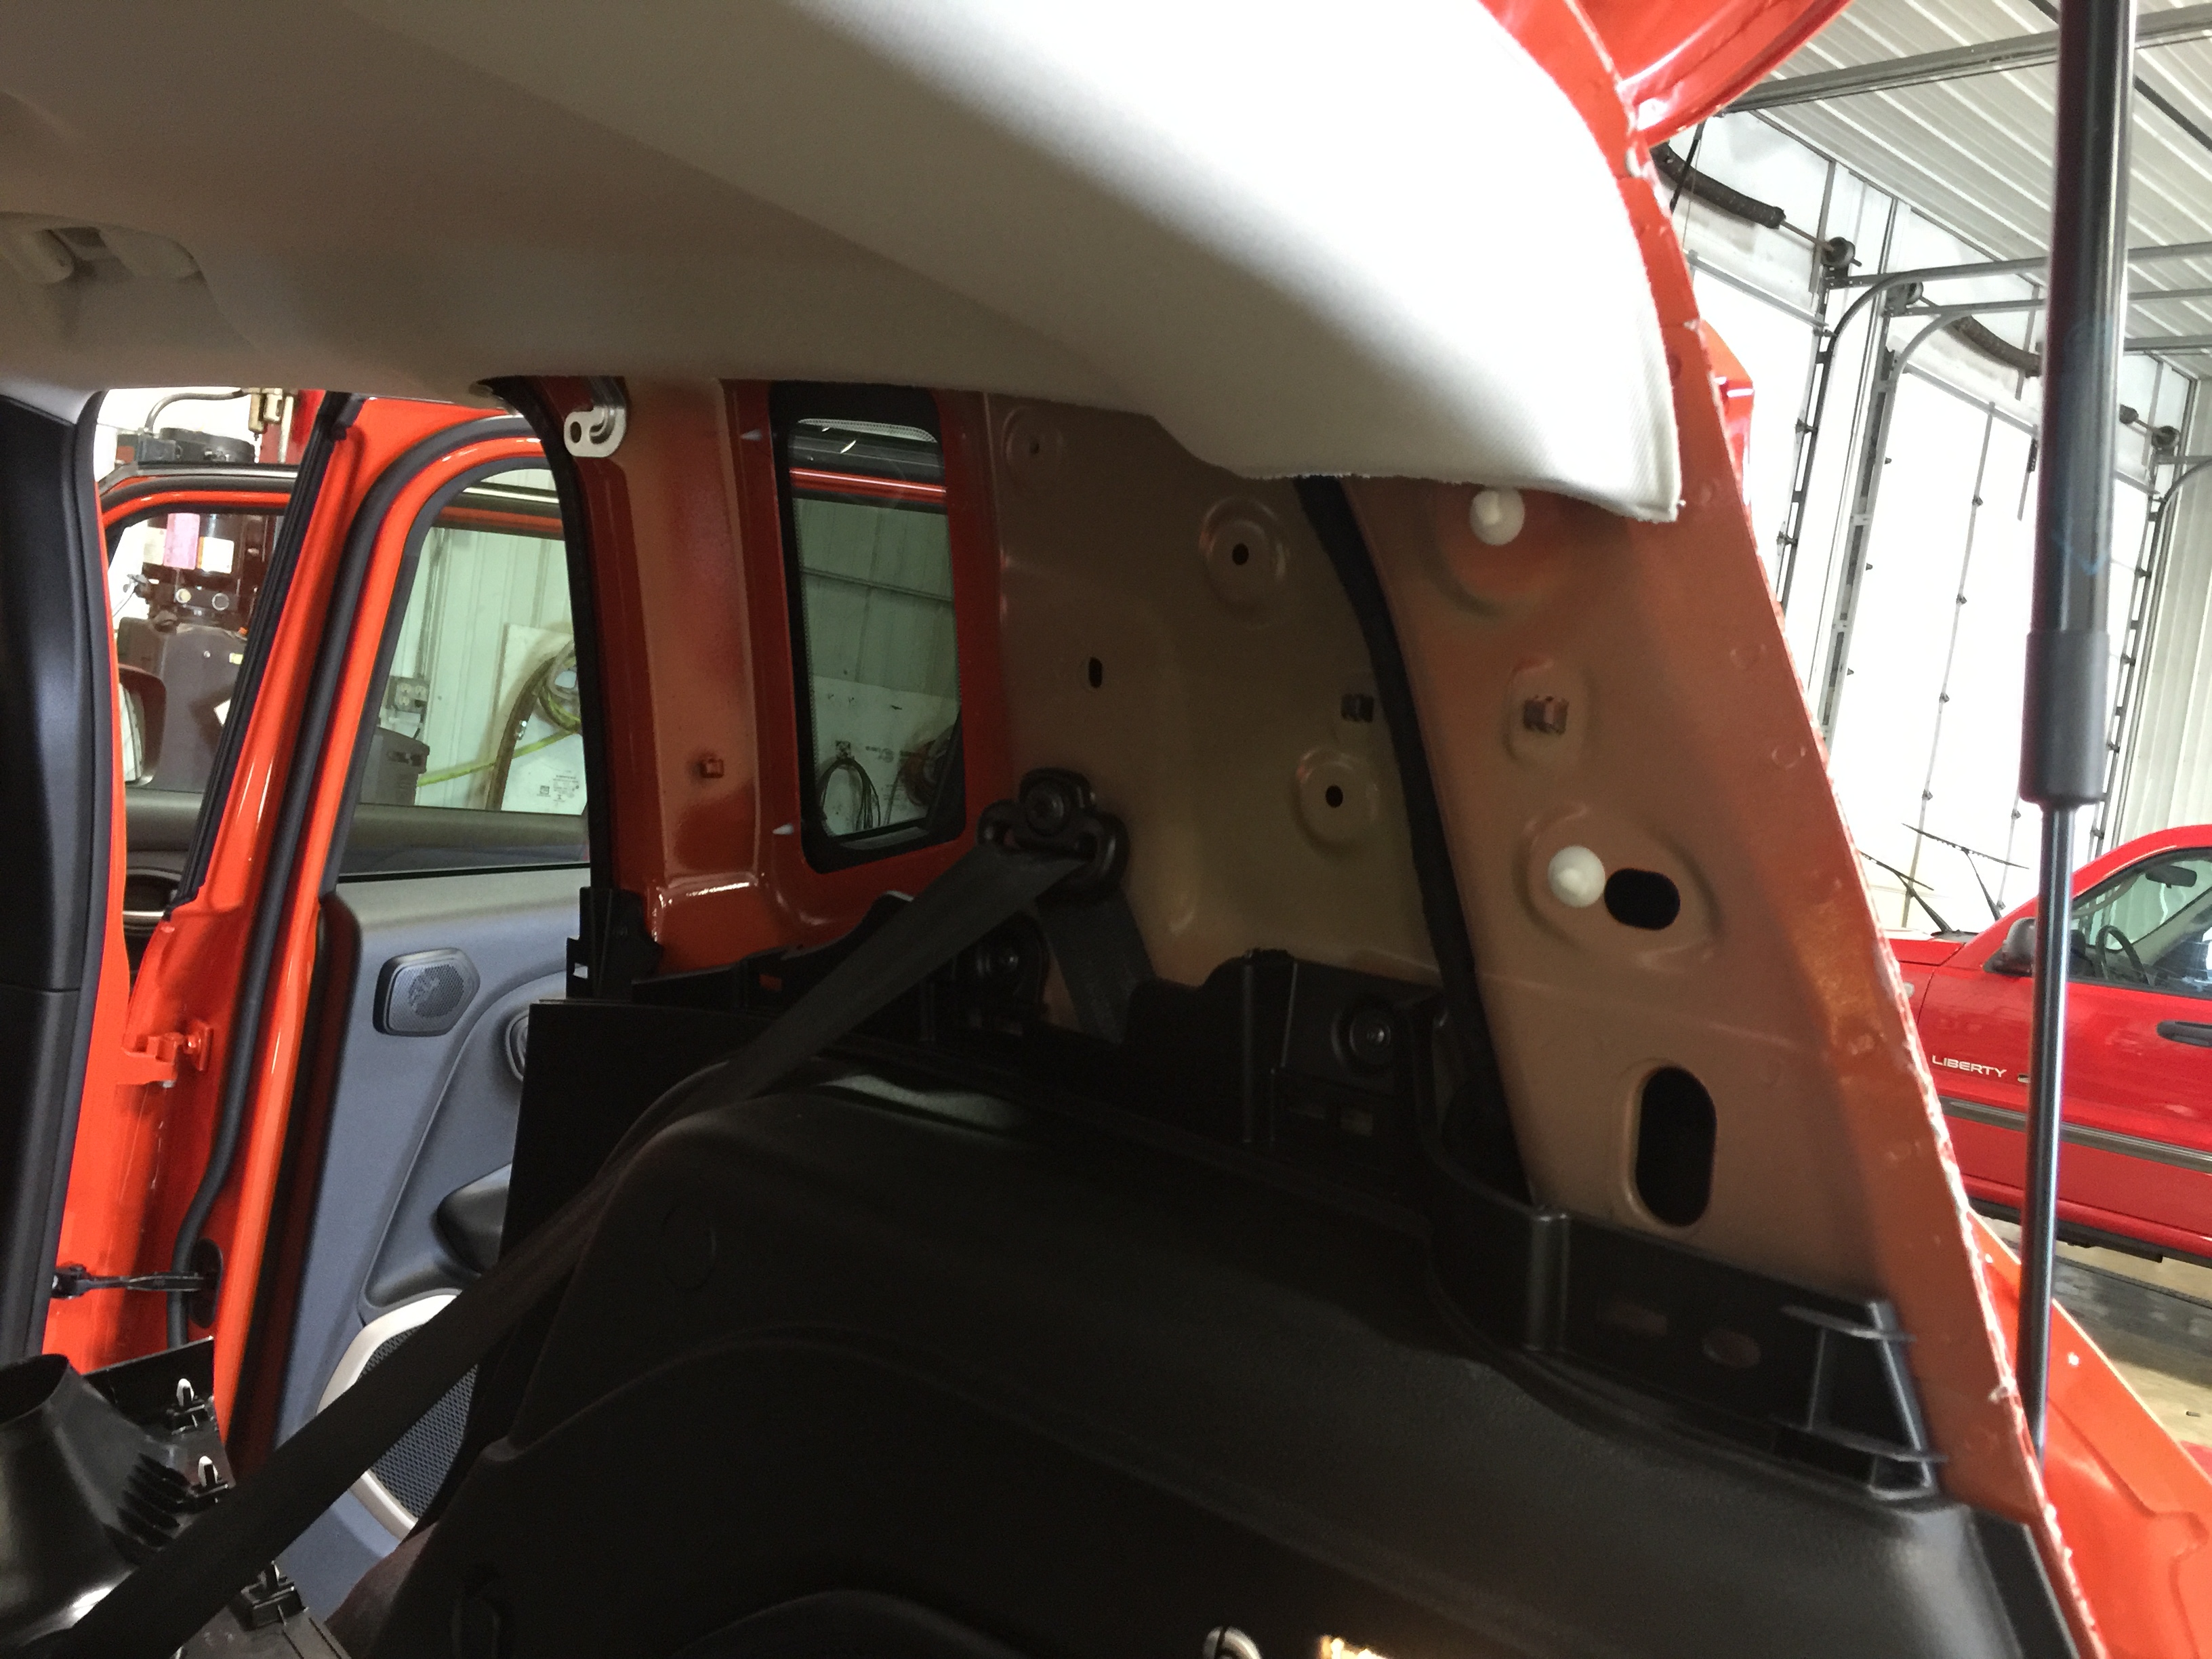 http://217dent.com 2016 Jeep Renegade Latitude Dent Repair, Hail Repair, Ding Repair, Springfield, IL. Decatur, IL. Taylorville, IL mobile dent repair